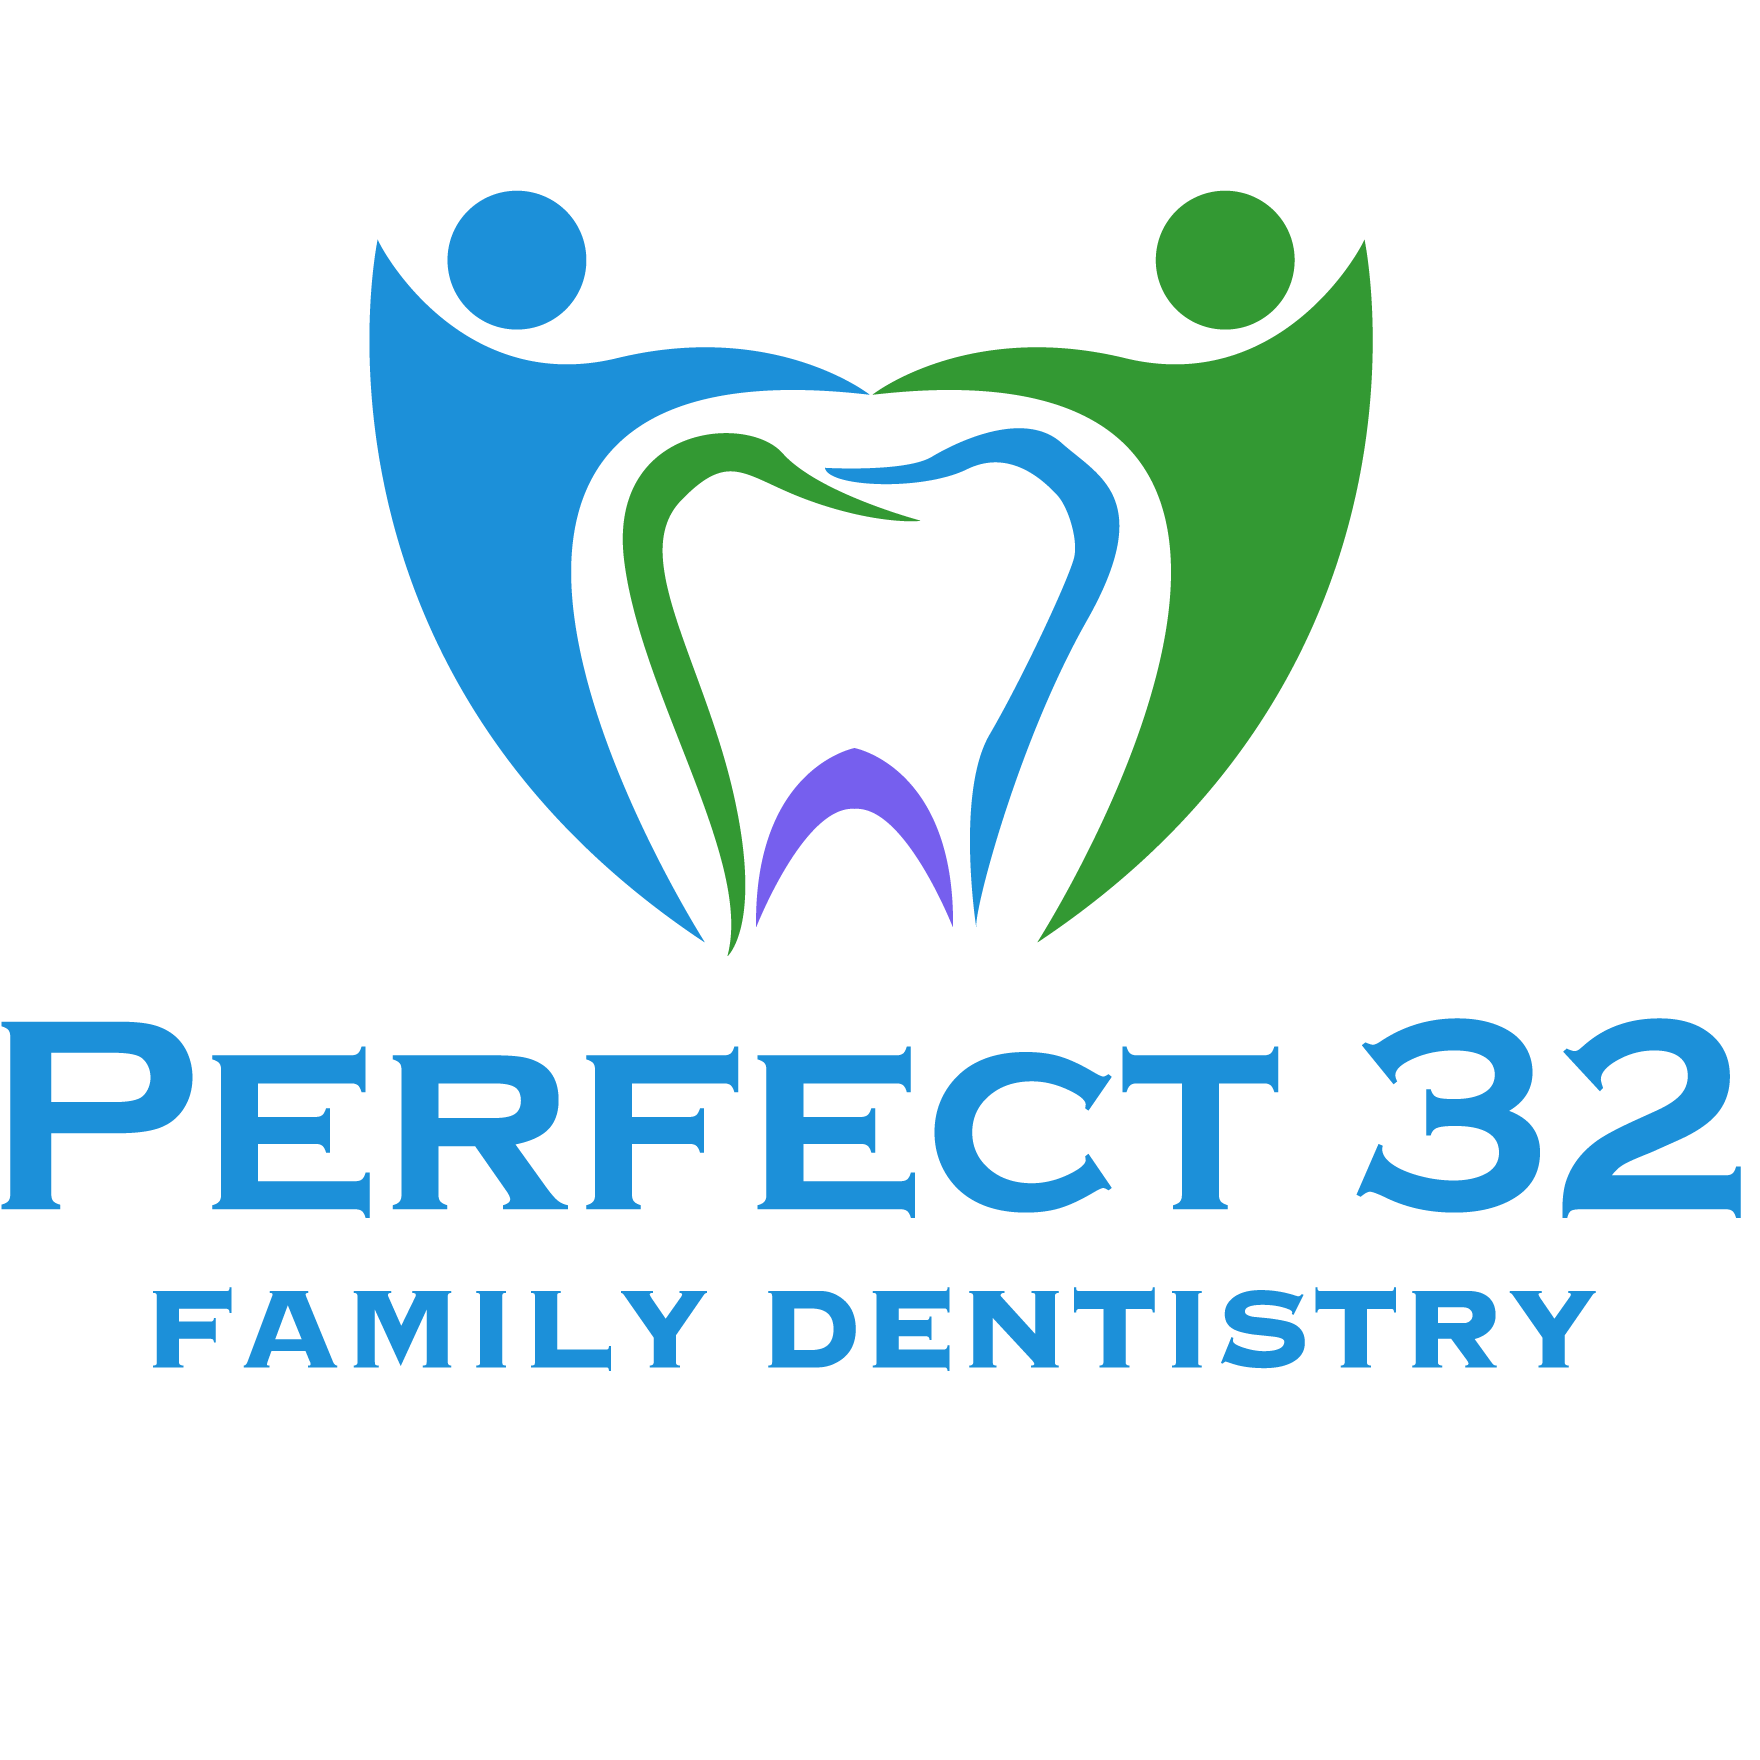 Perfect 32 Family Dentistry Logo